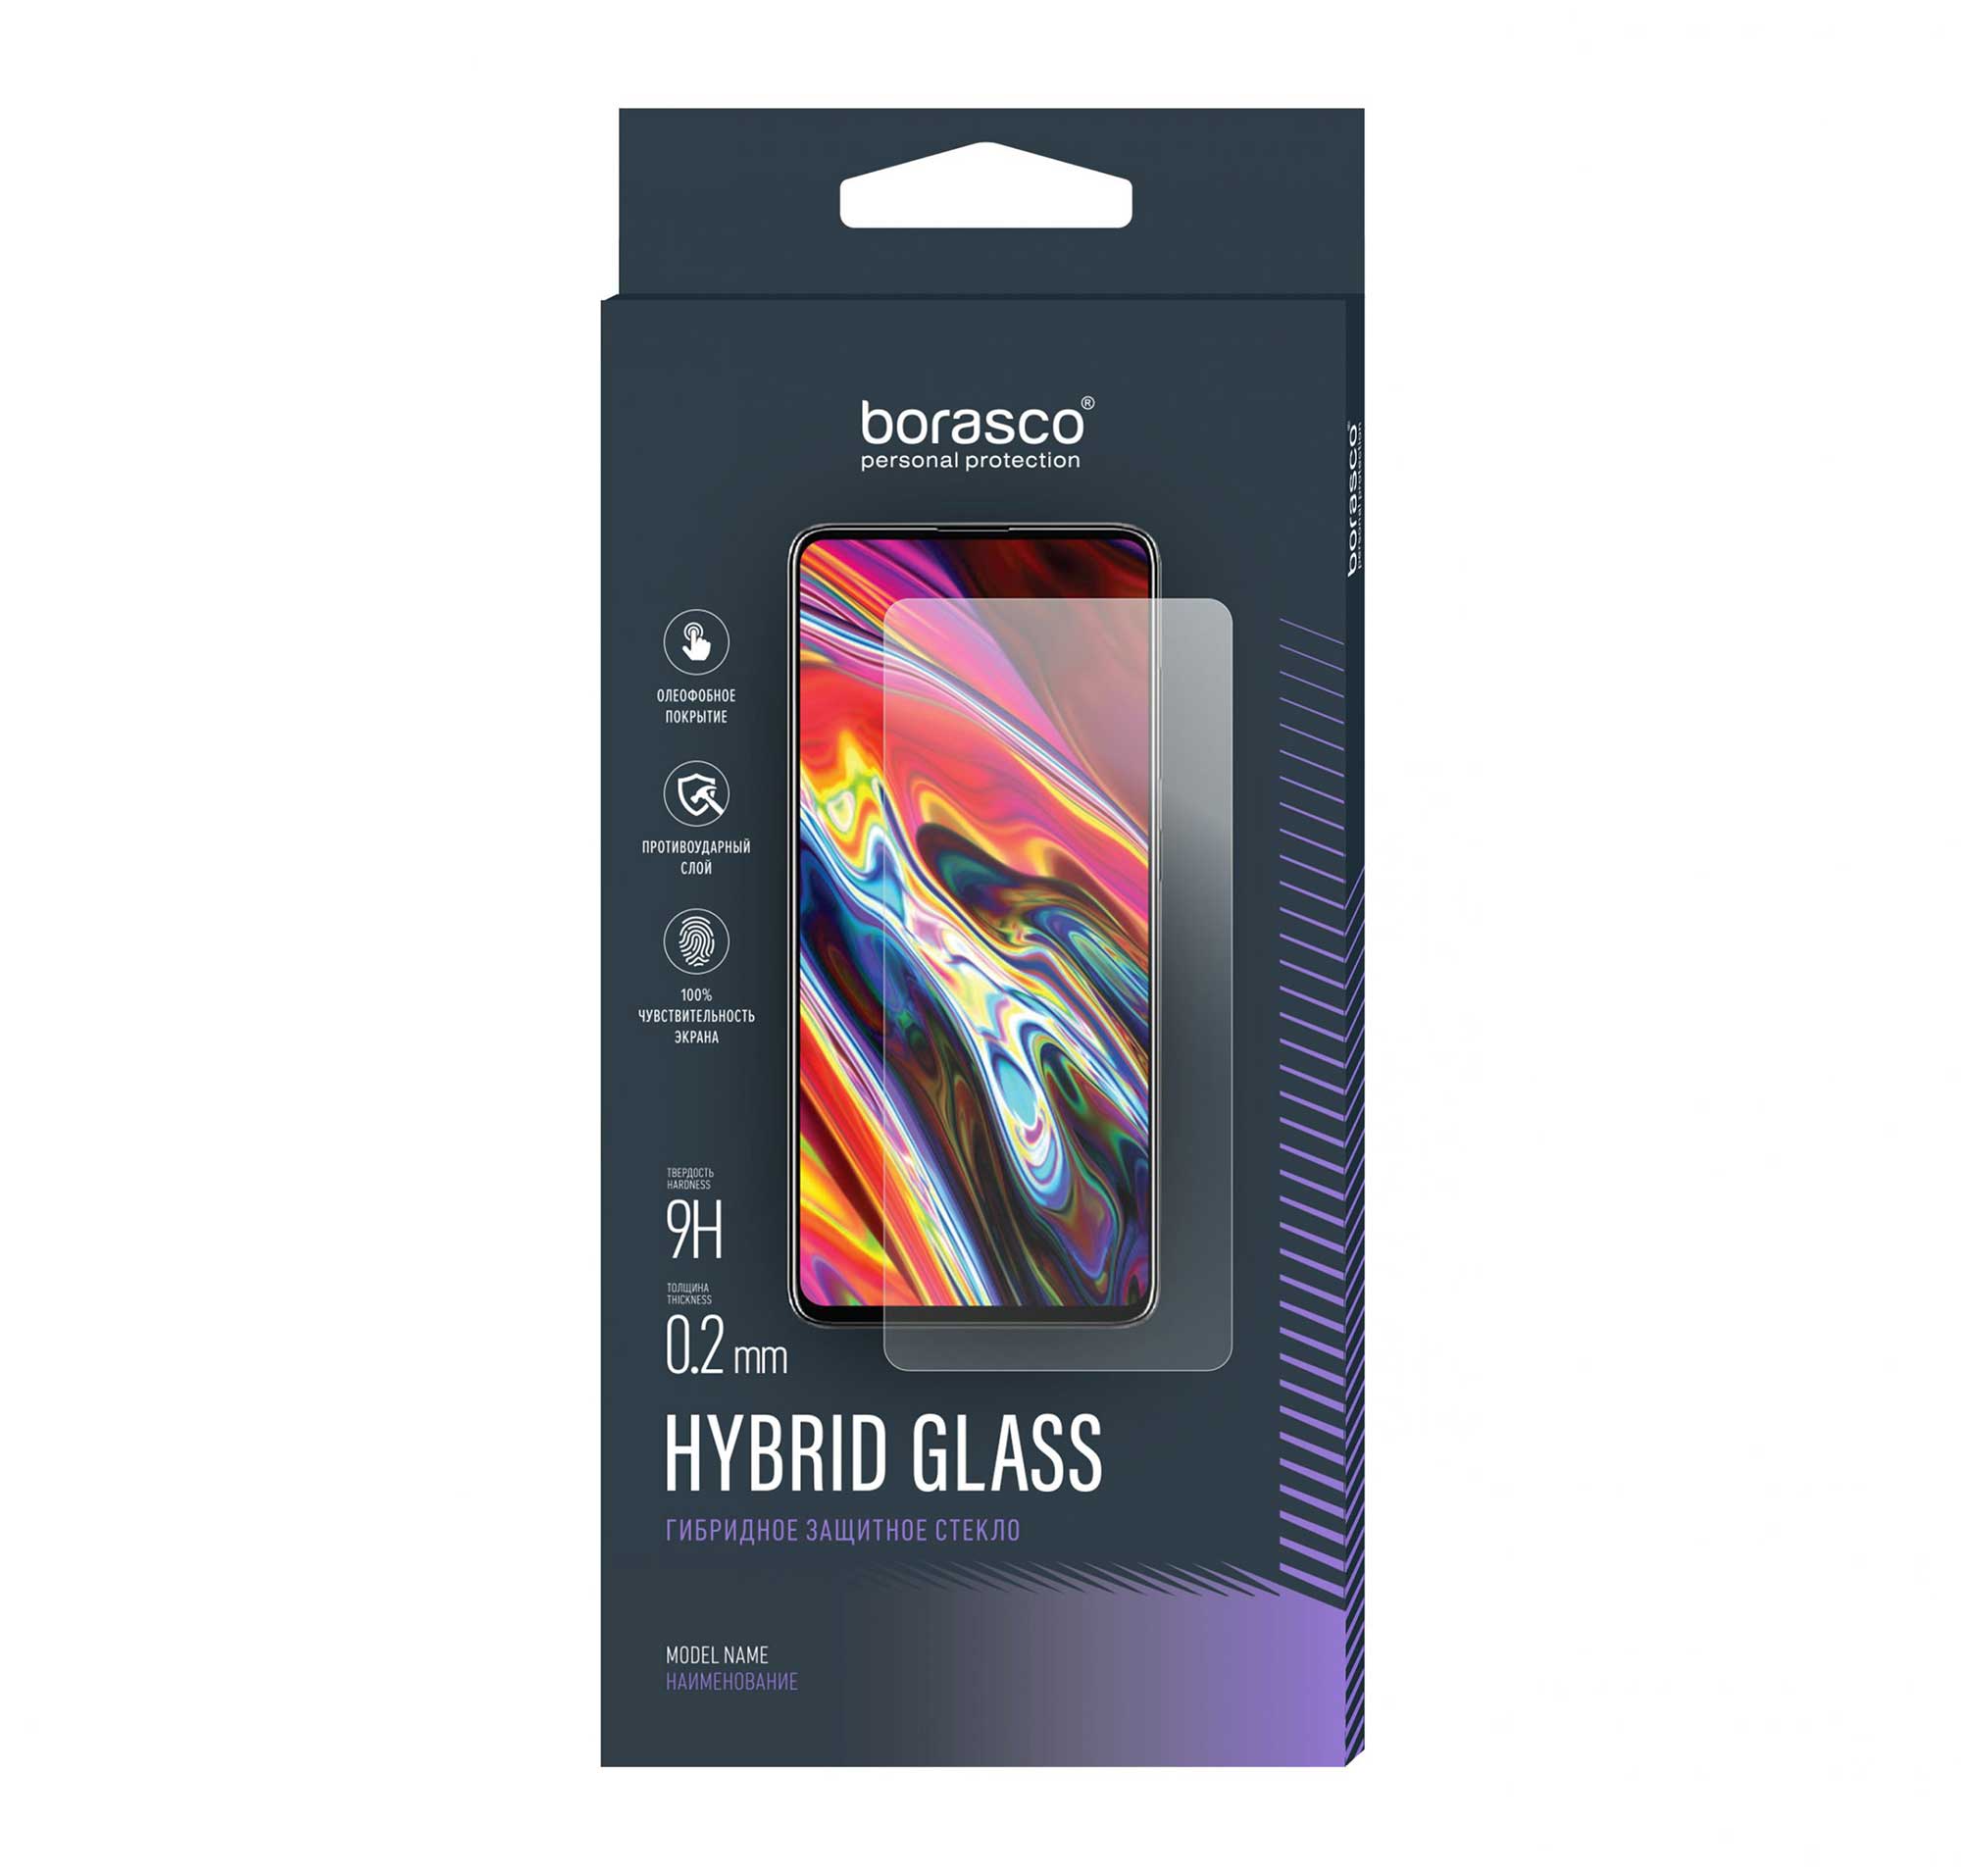 Защитное стекло Hybrid Glass для Itel Vision 1 Pro чехол mypads микки маус троллер для itel s16 itel vision 1 pro задняя панель накладка бампер